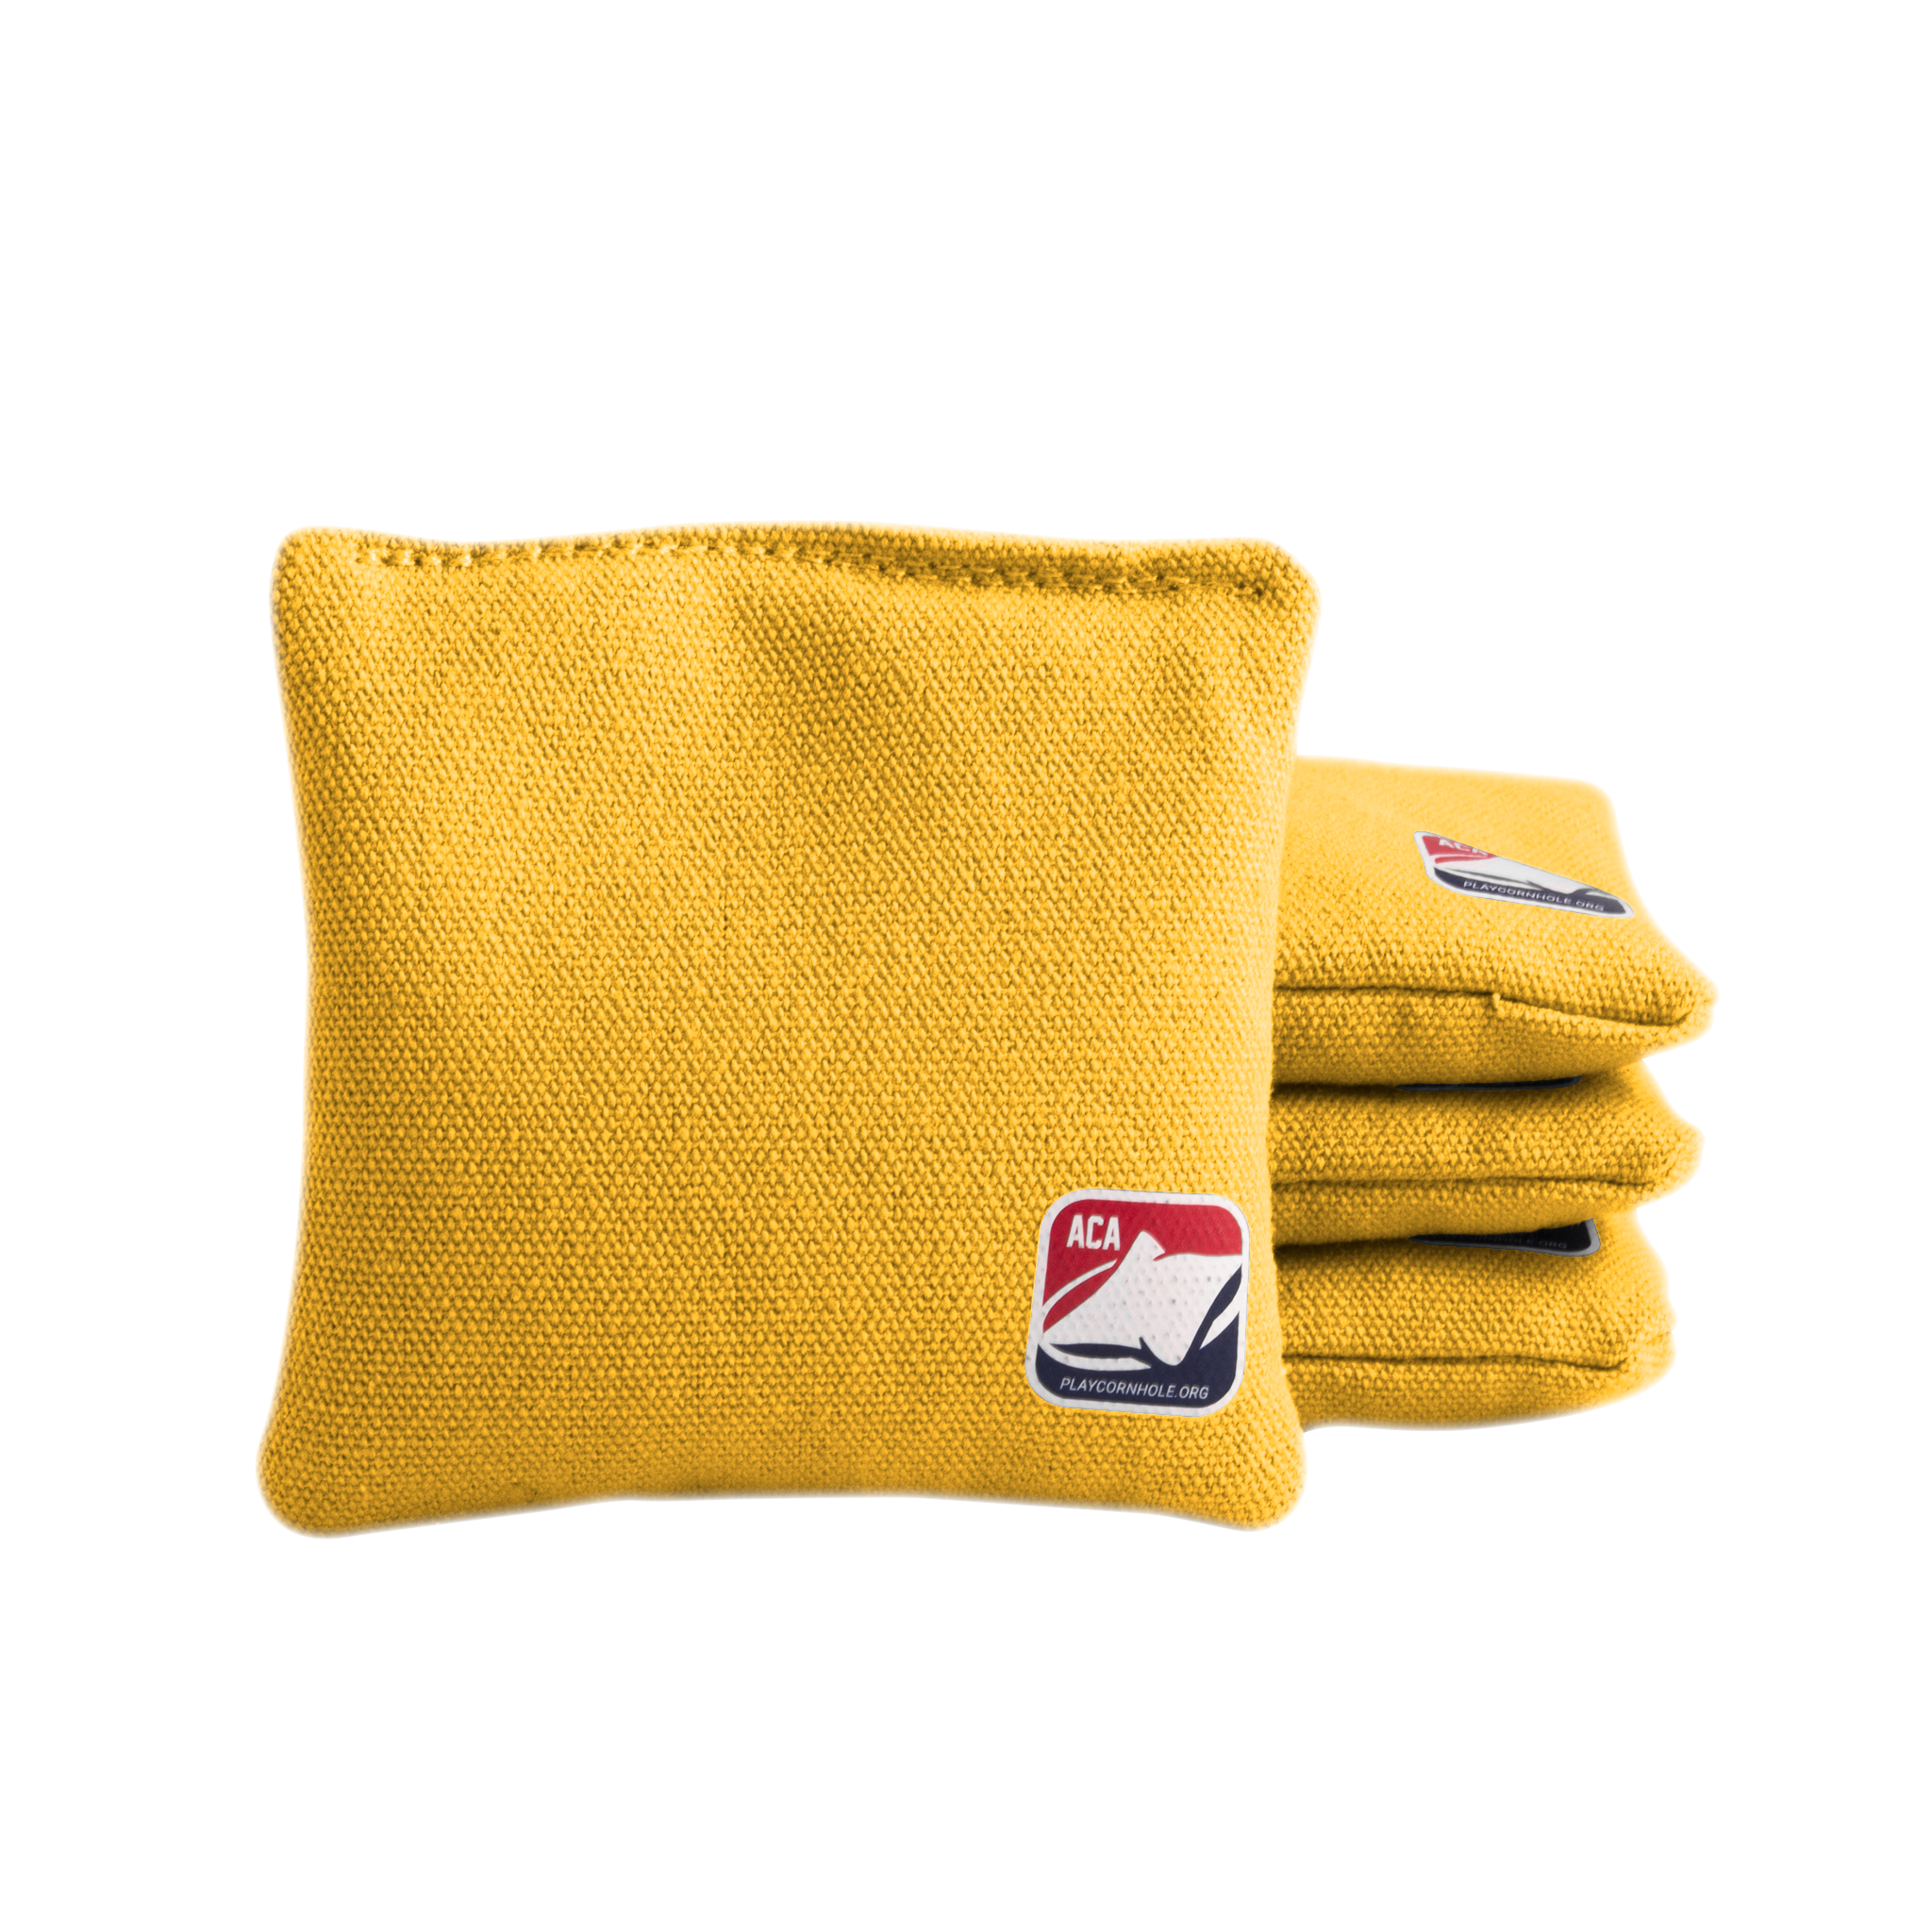 4-in Daily 44x Yellow Recreational Cornhole Bags